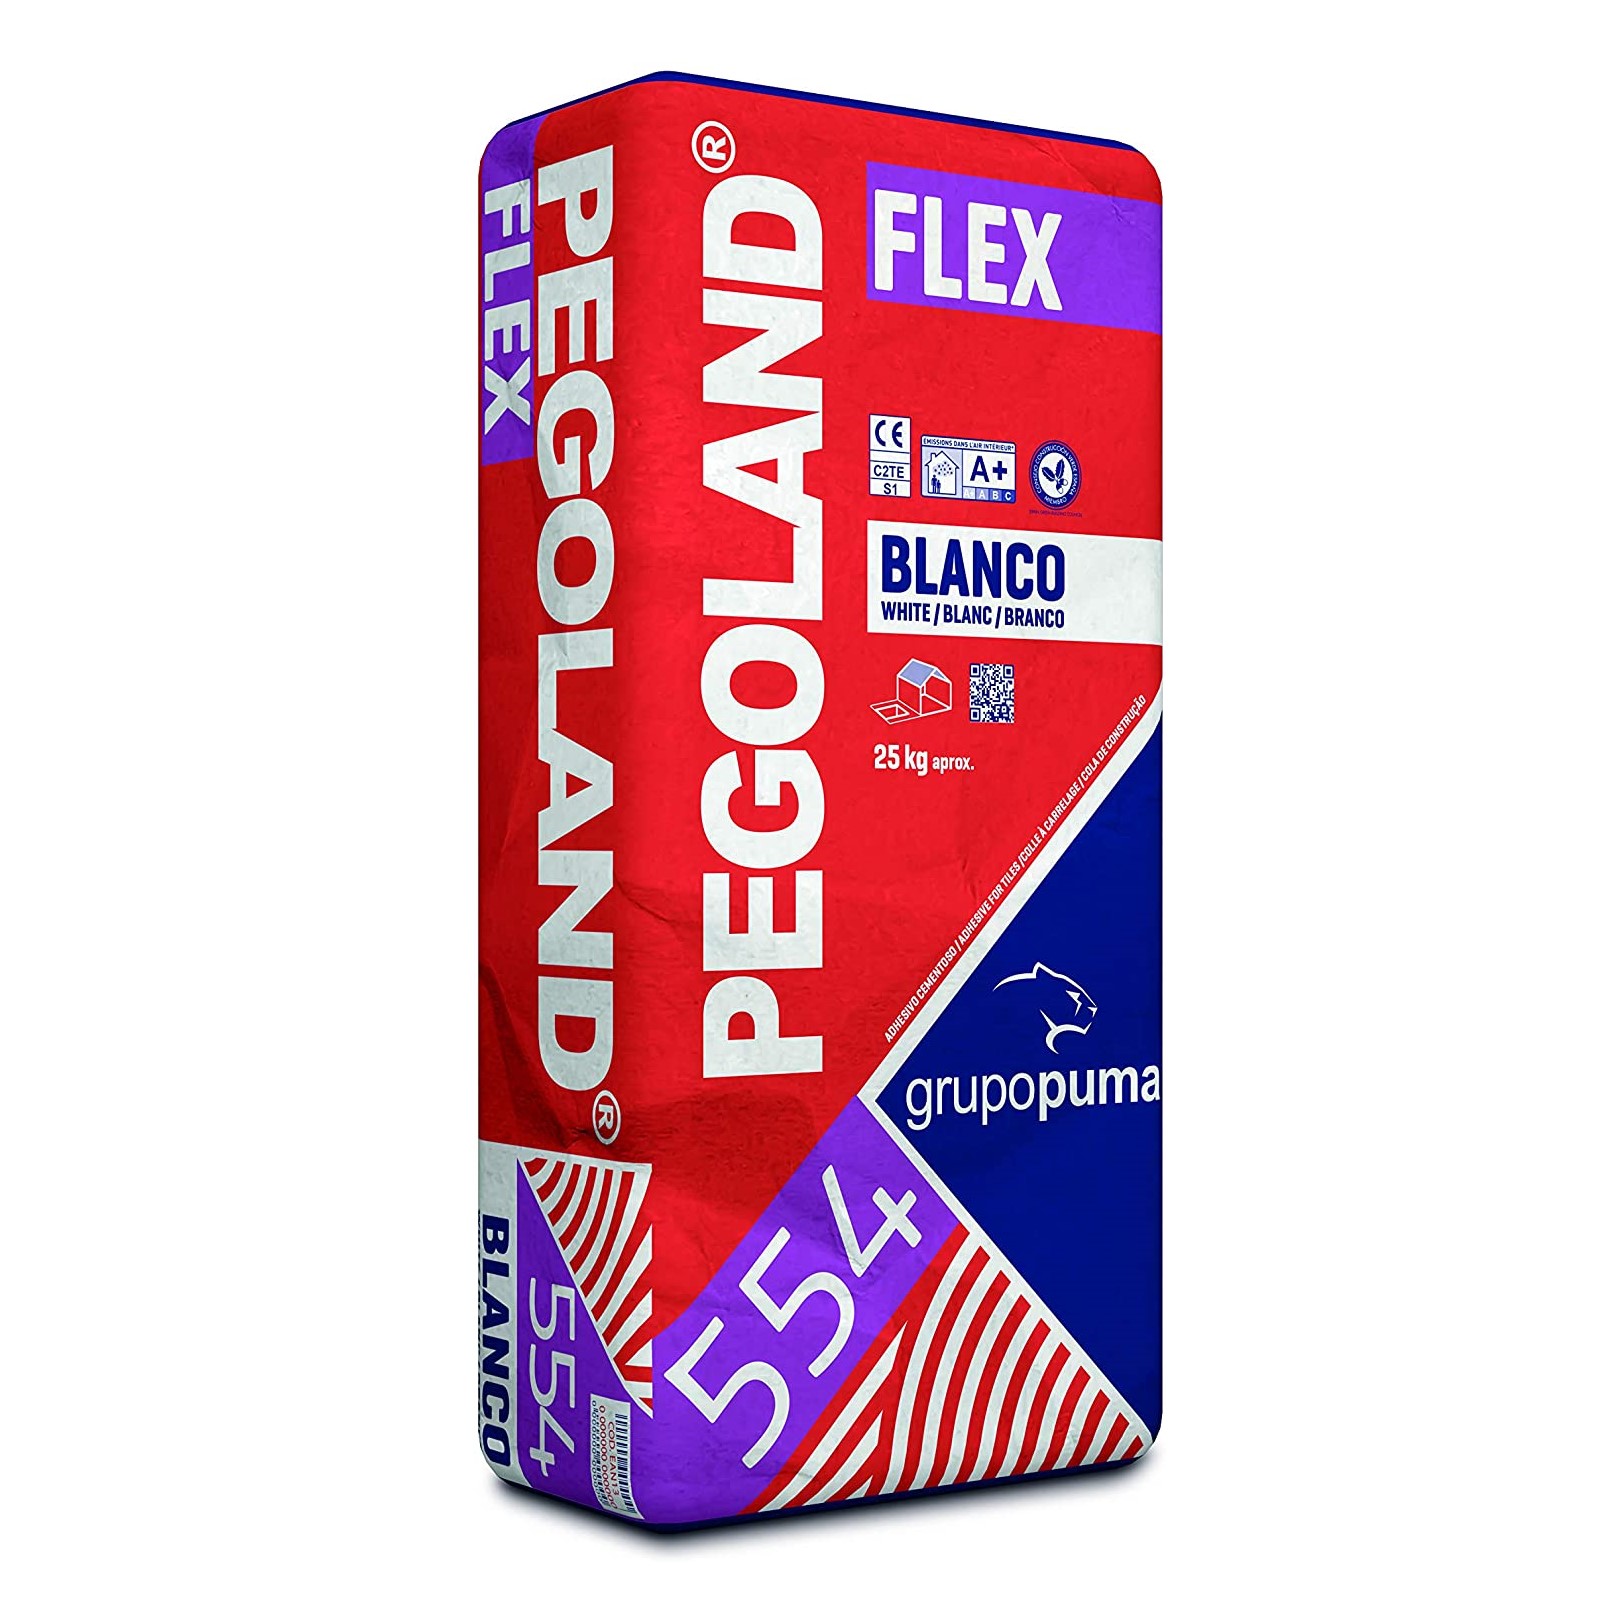 Puma Pegoland  Flex Blanco C2 TE S1 (554) (25Kg) /100003/